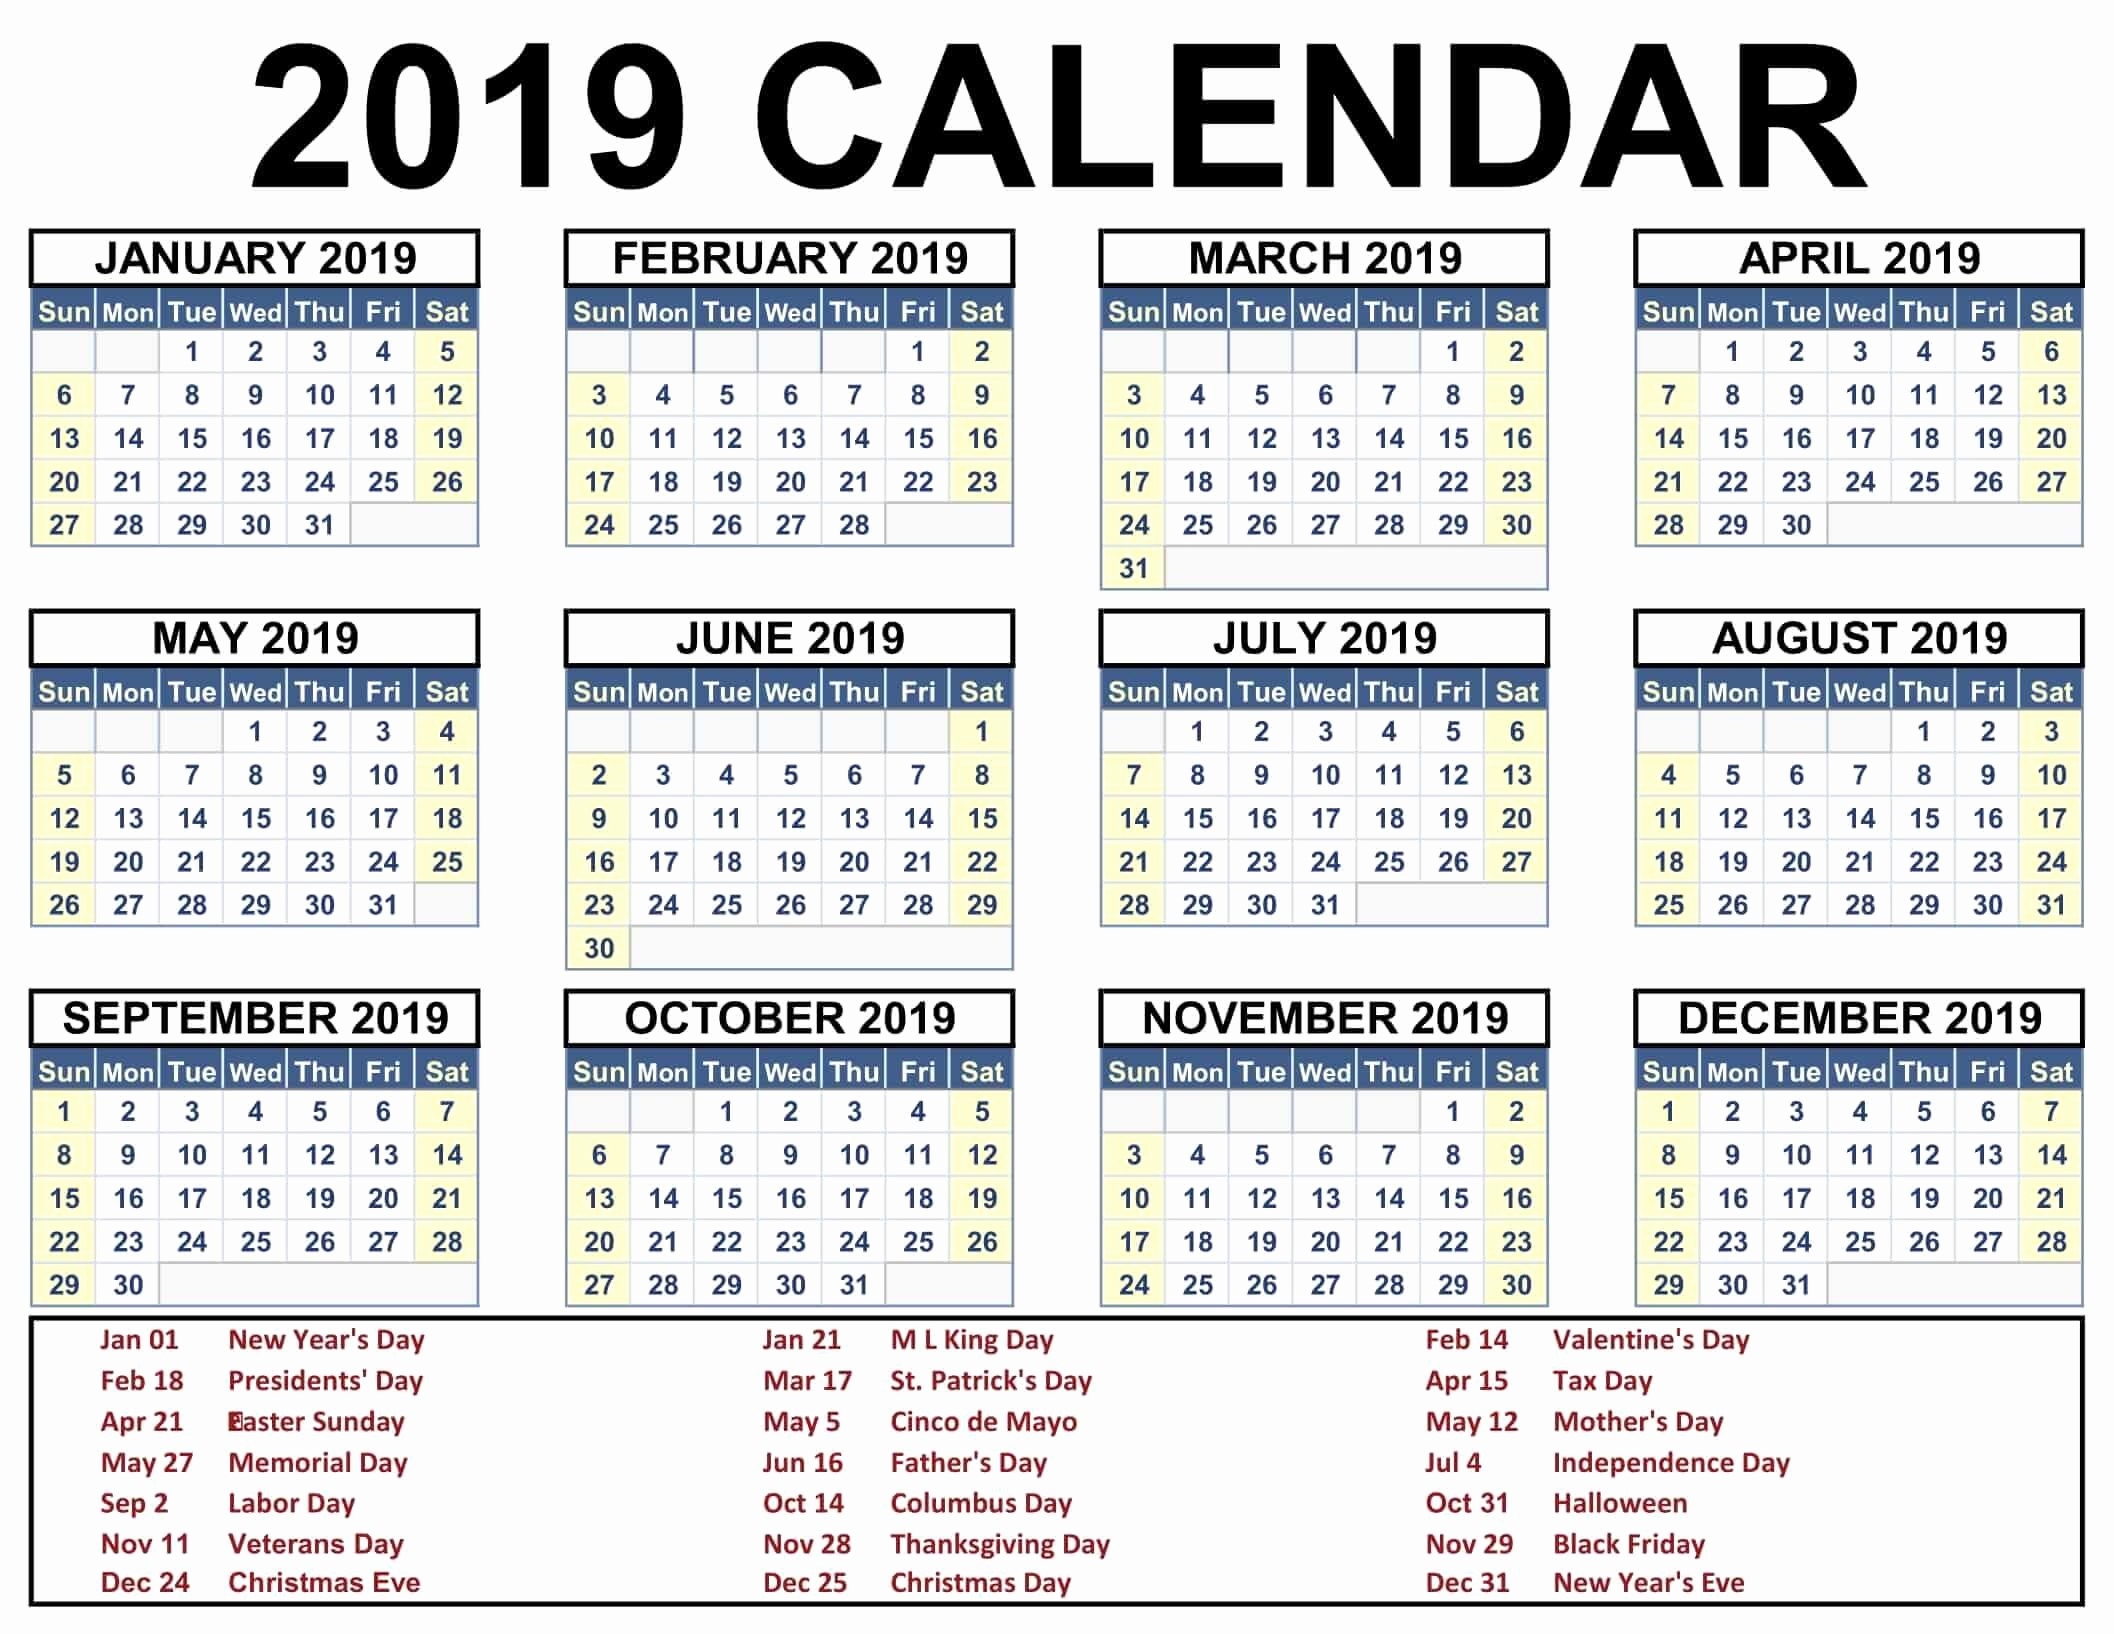 Jewish Holiday Calendar 2019 2020-Jewish Calnedar Wtih Holidays 2020